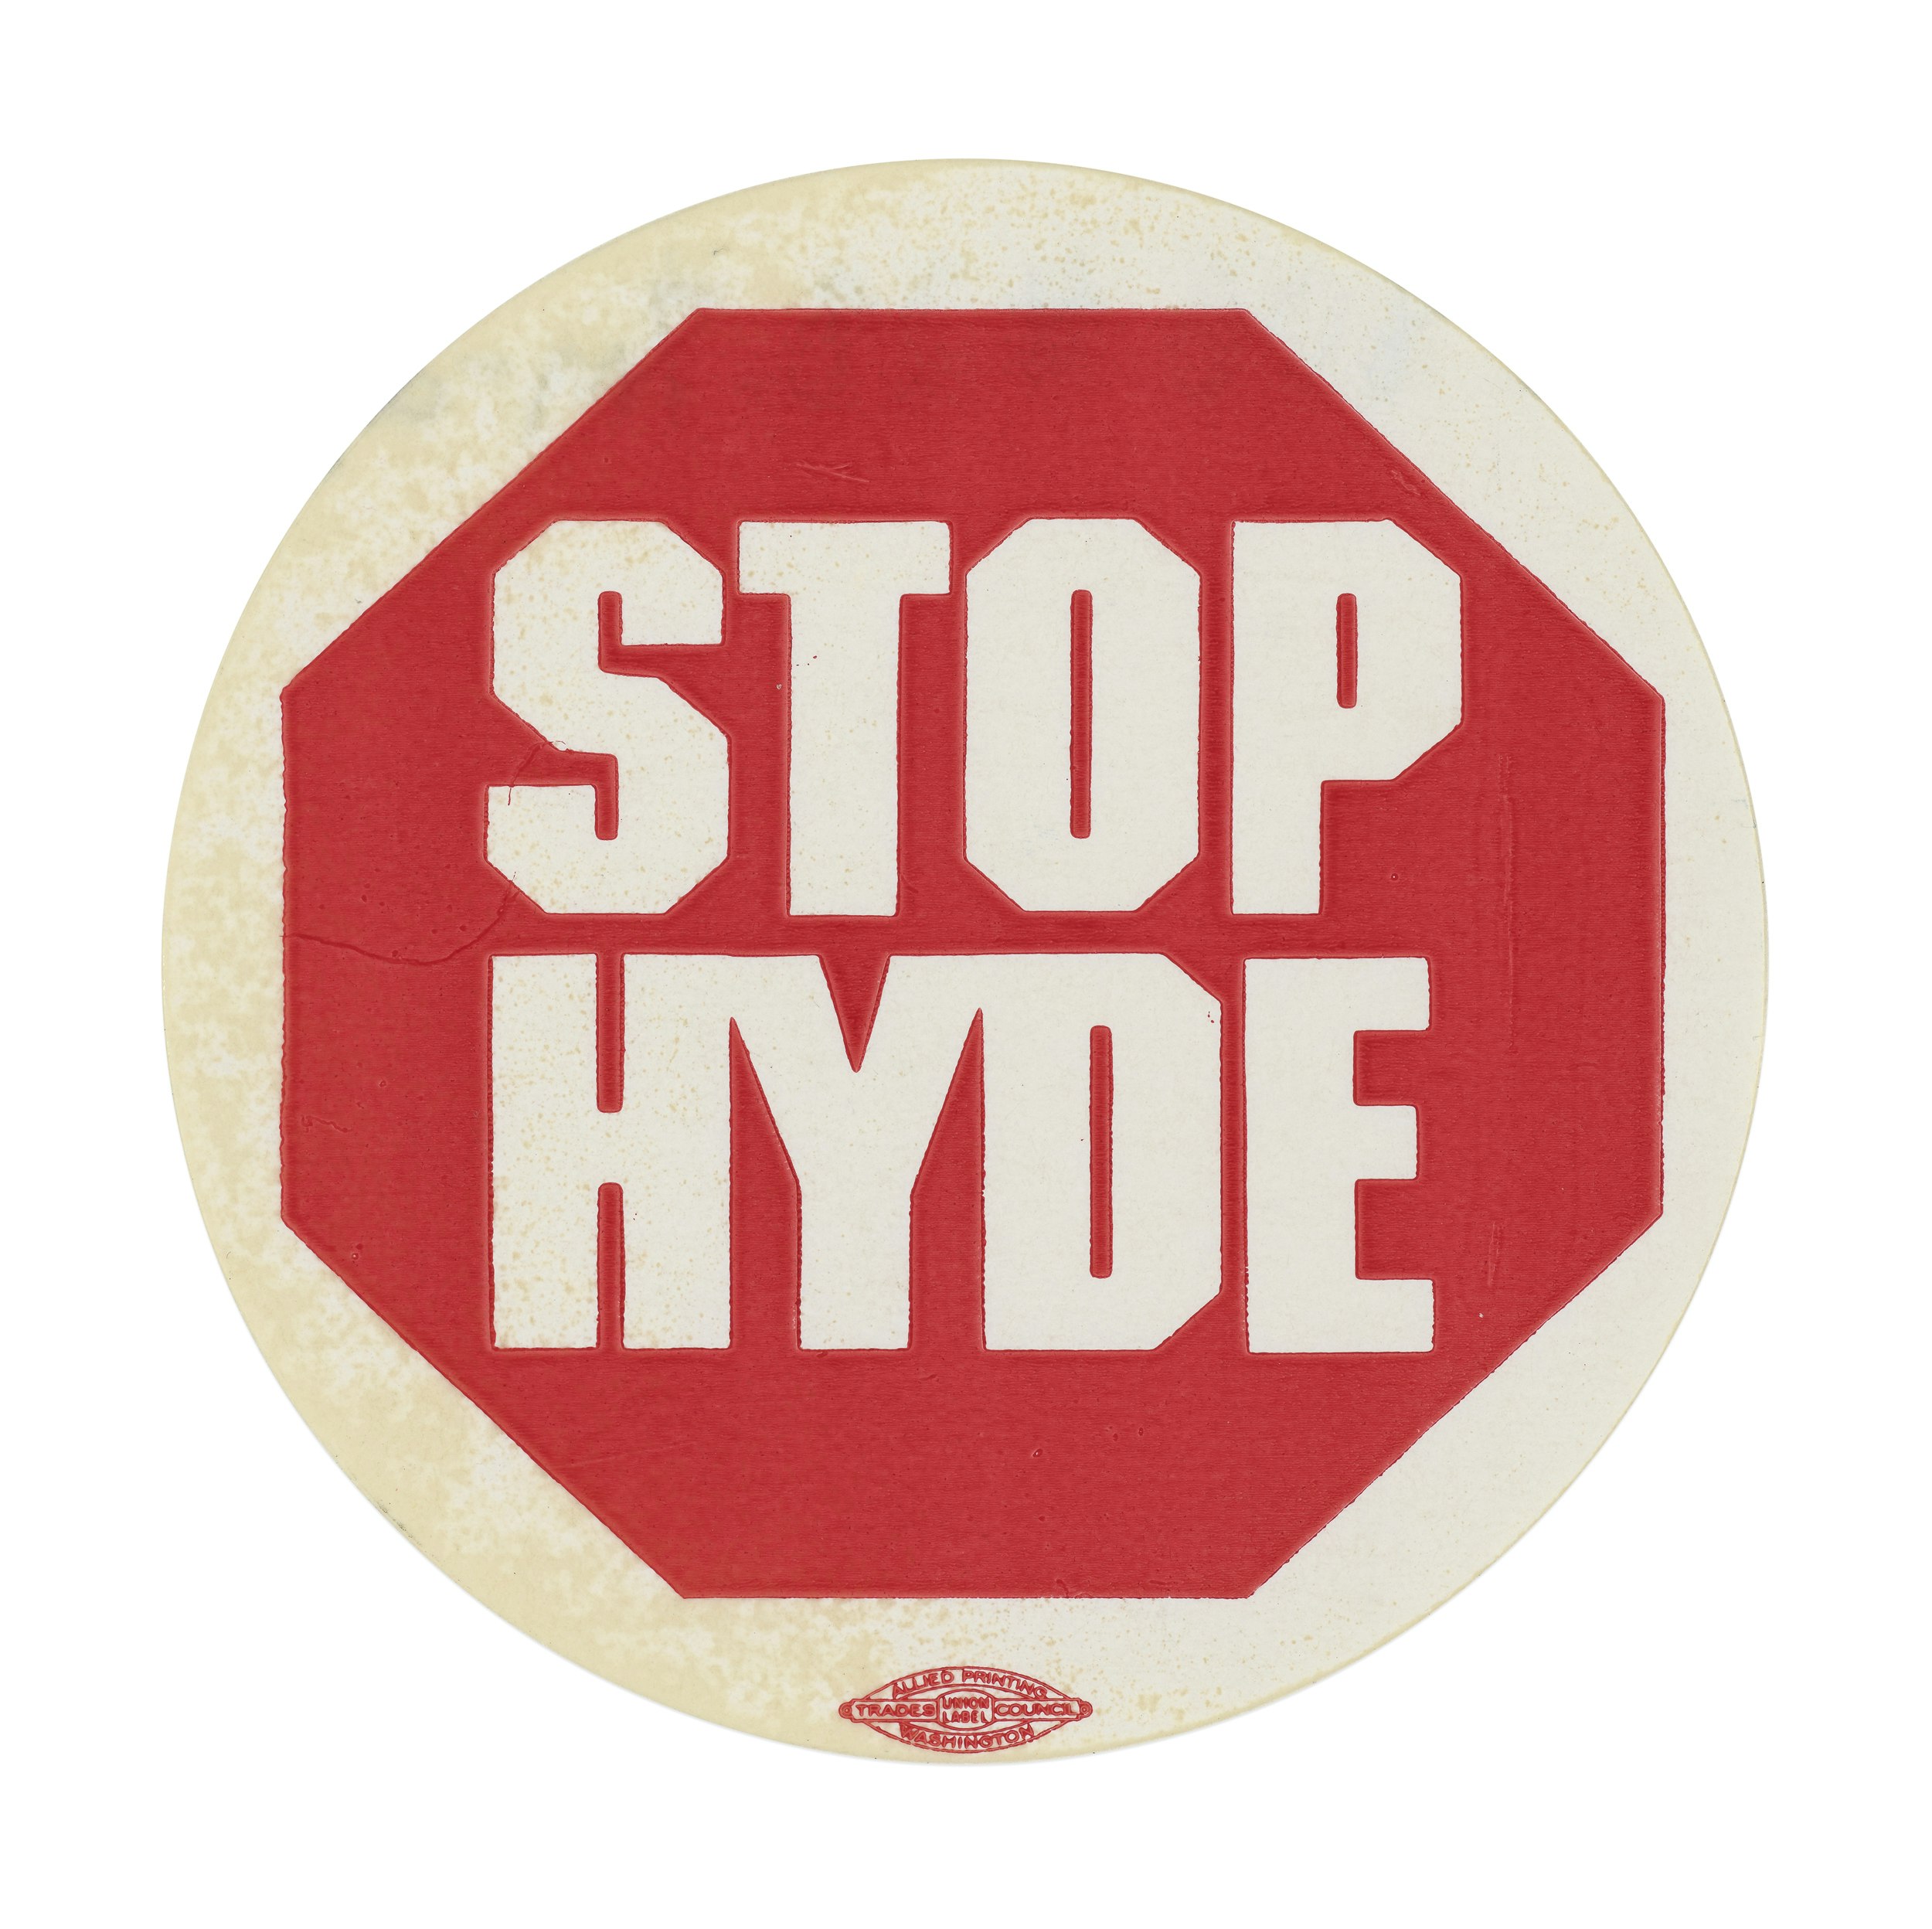 Julia Featheringill Courtesy Stop Hyde Sticker